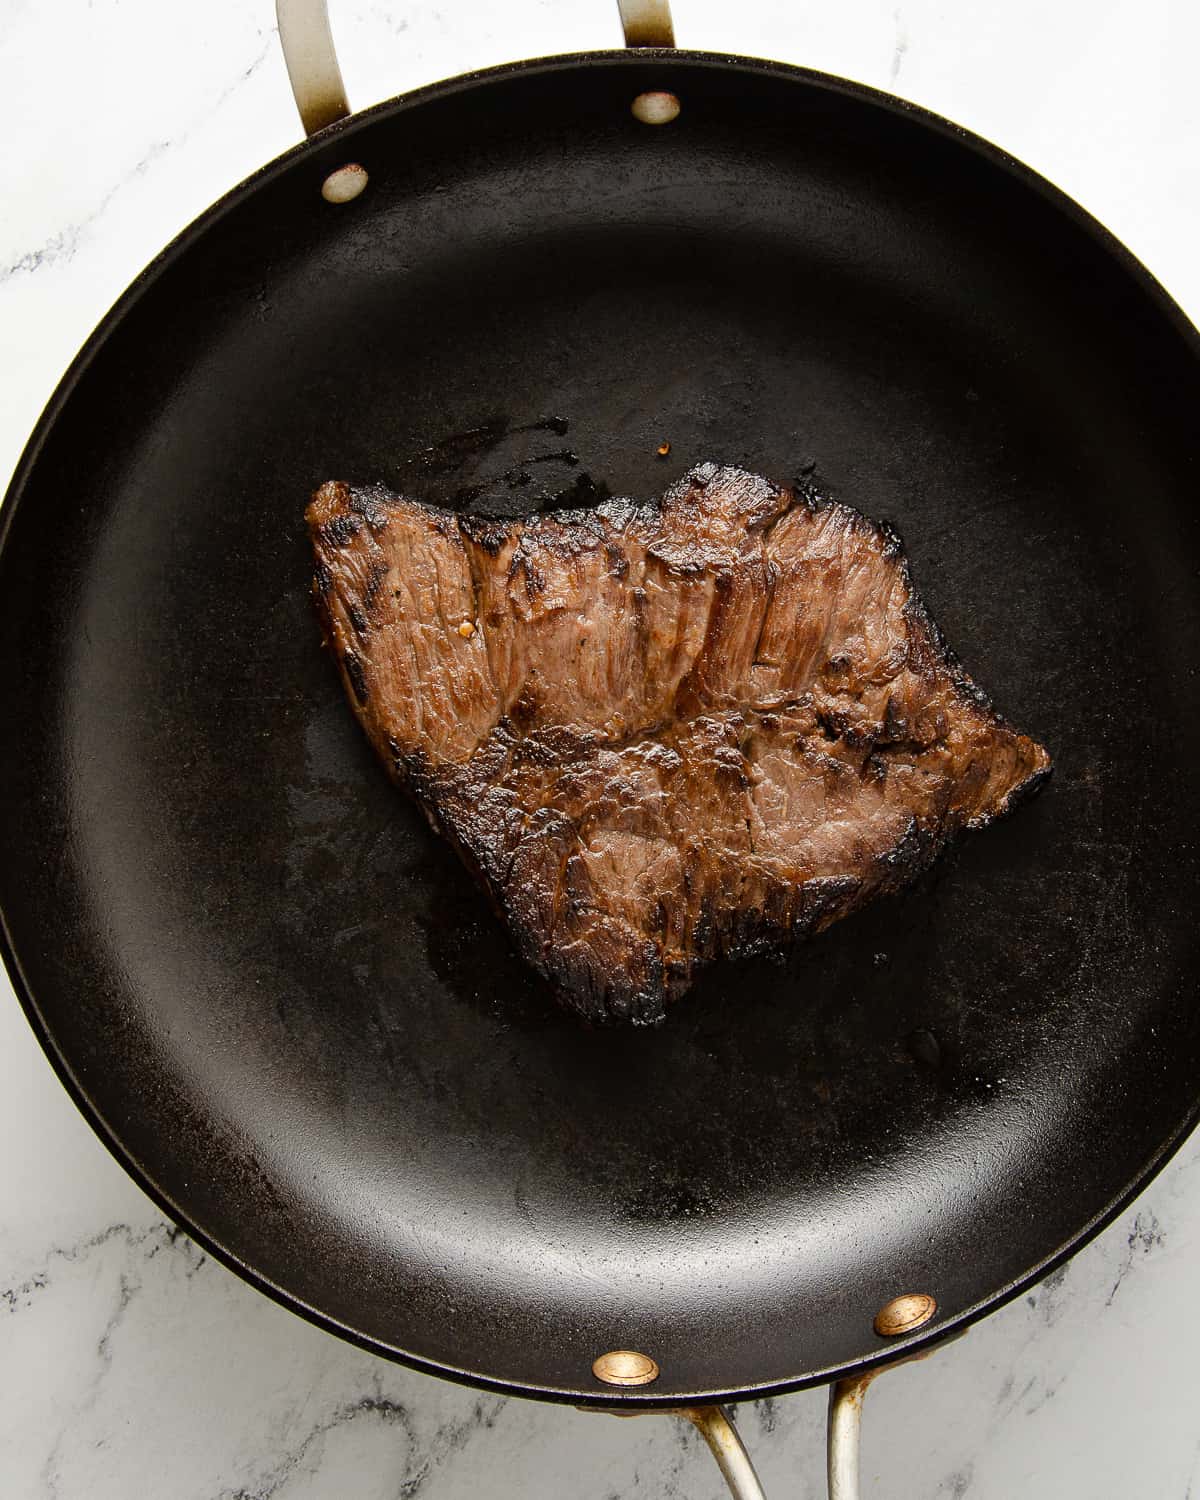 A seared carne asada on a skillet.